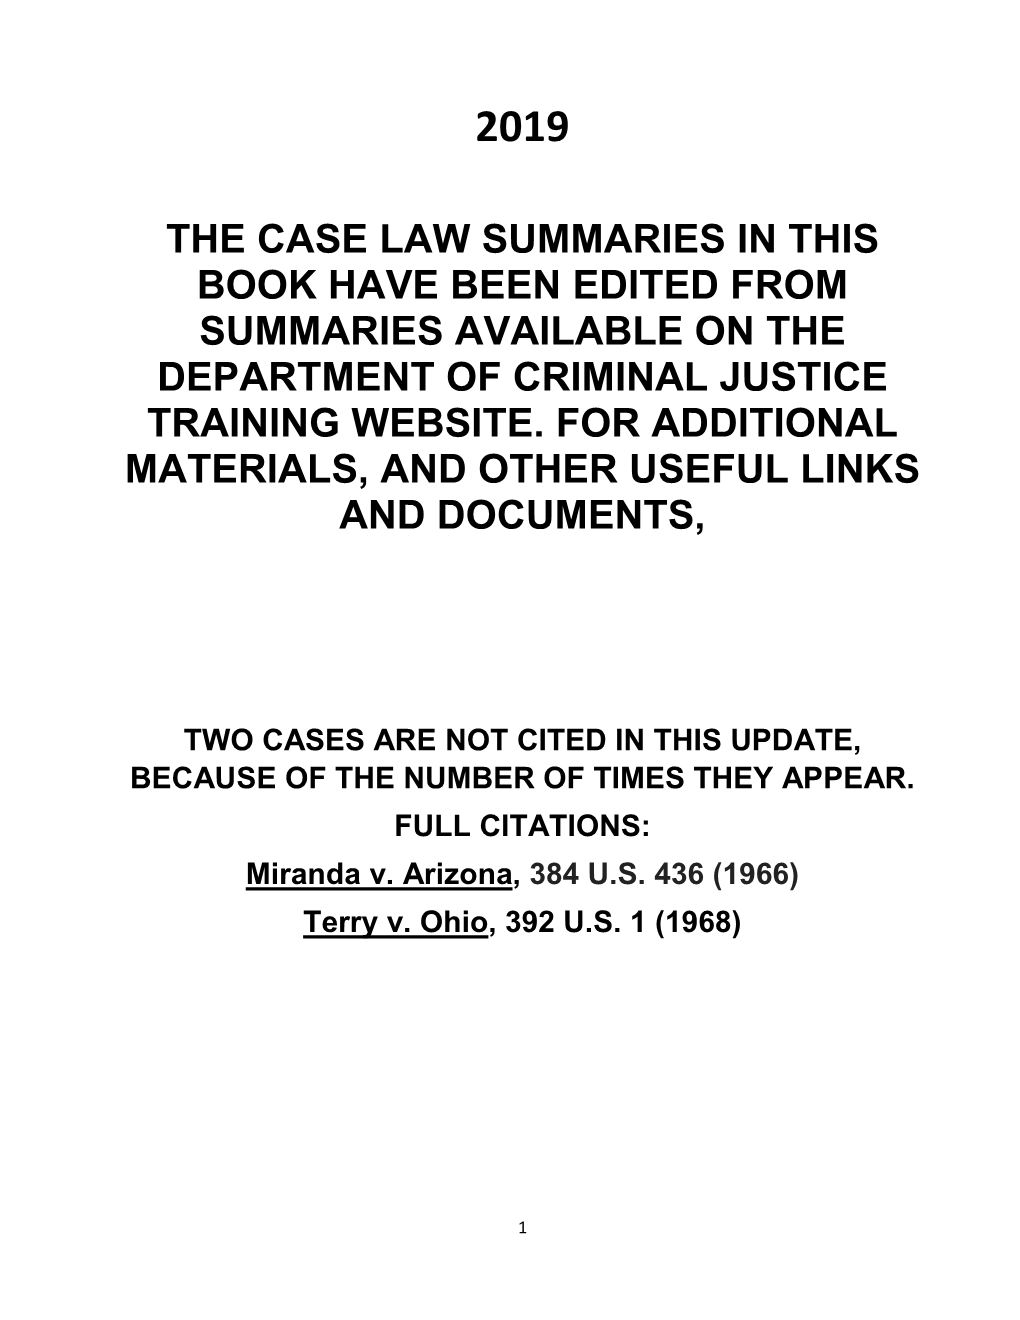 Case Law Summary Book 2019